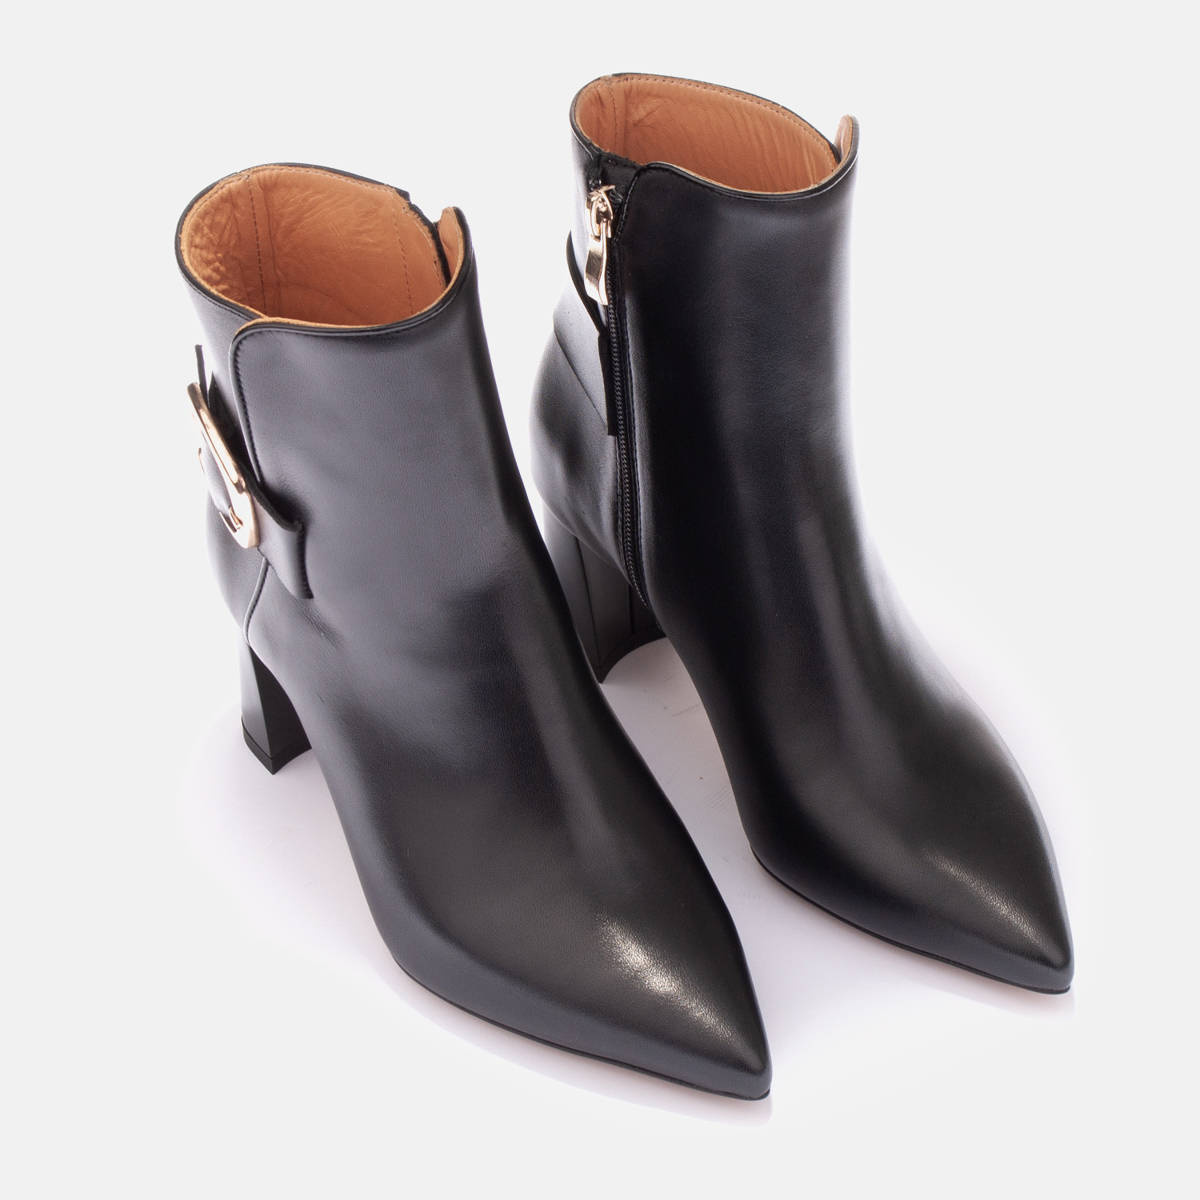 Elegant boots